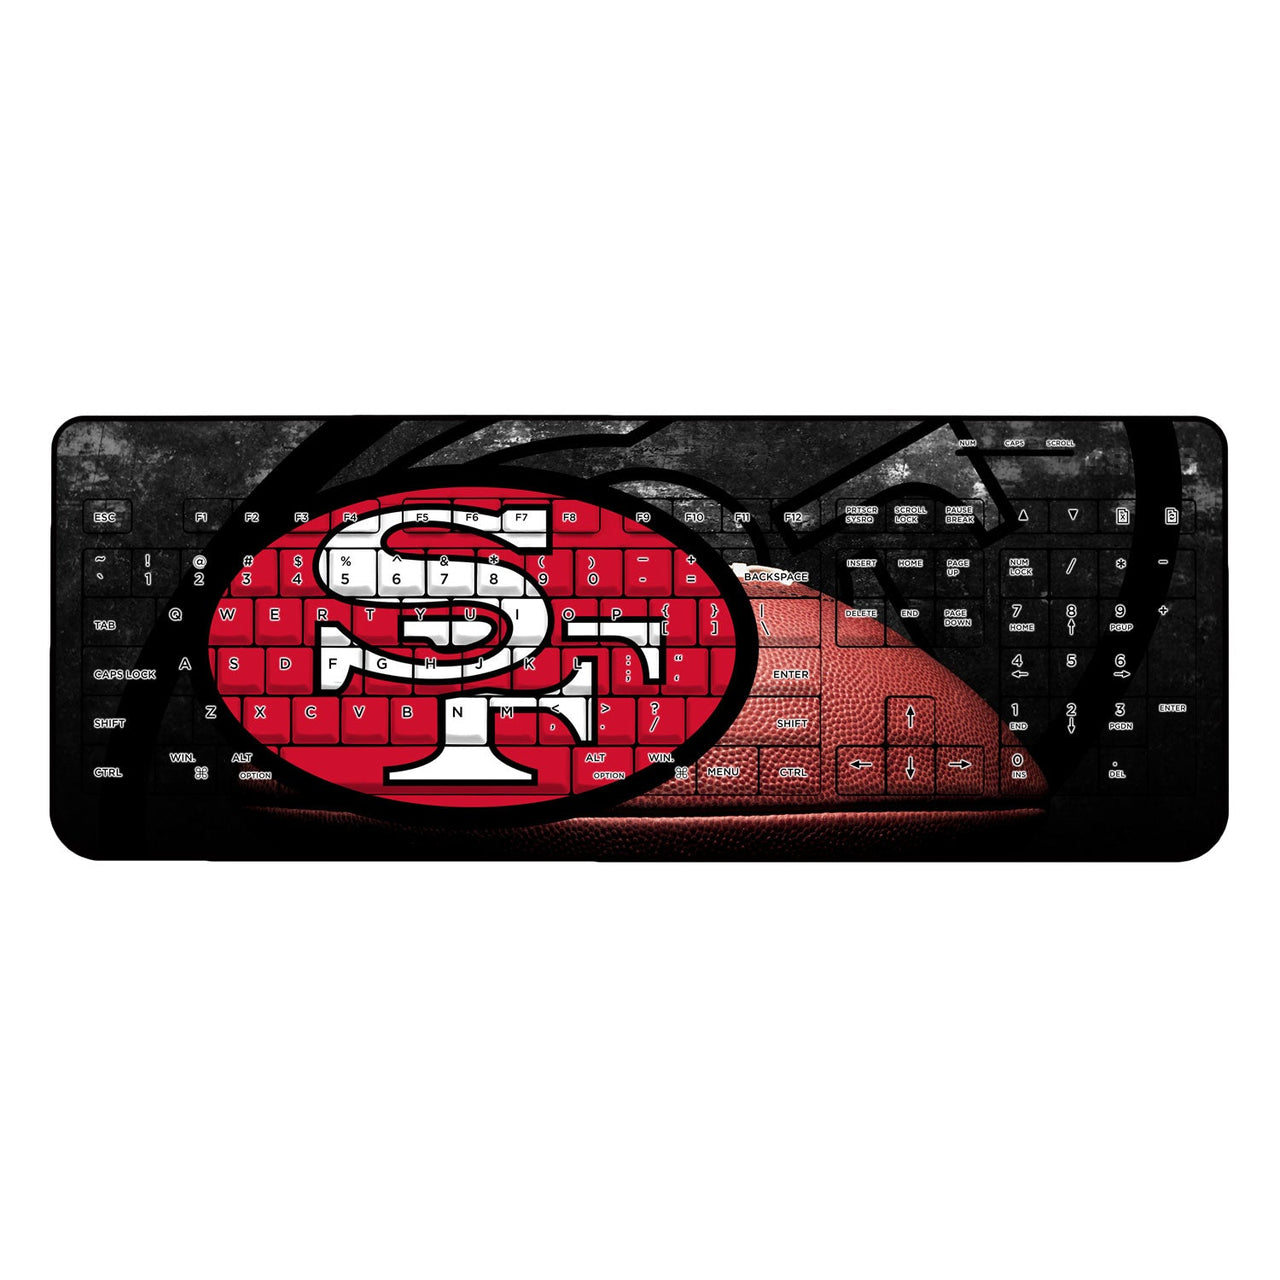 San Francisco 49ers Legendary Wireless USB Keyboard-0